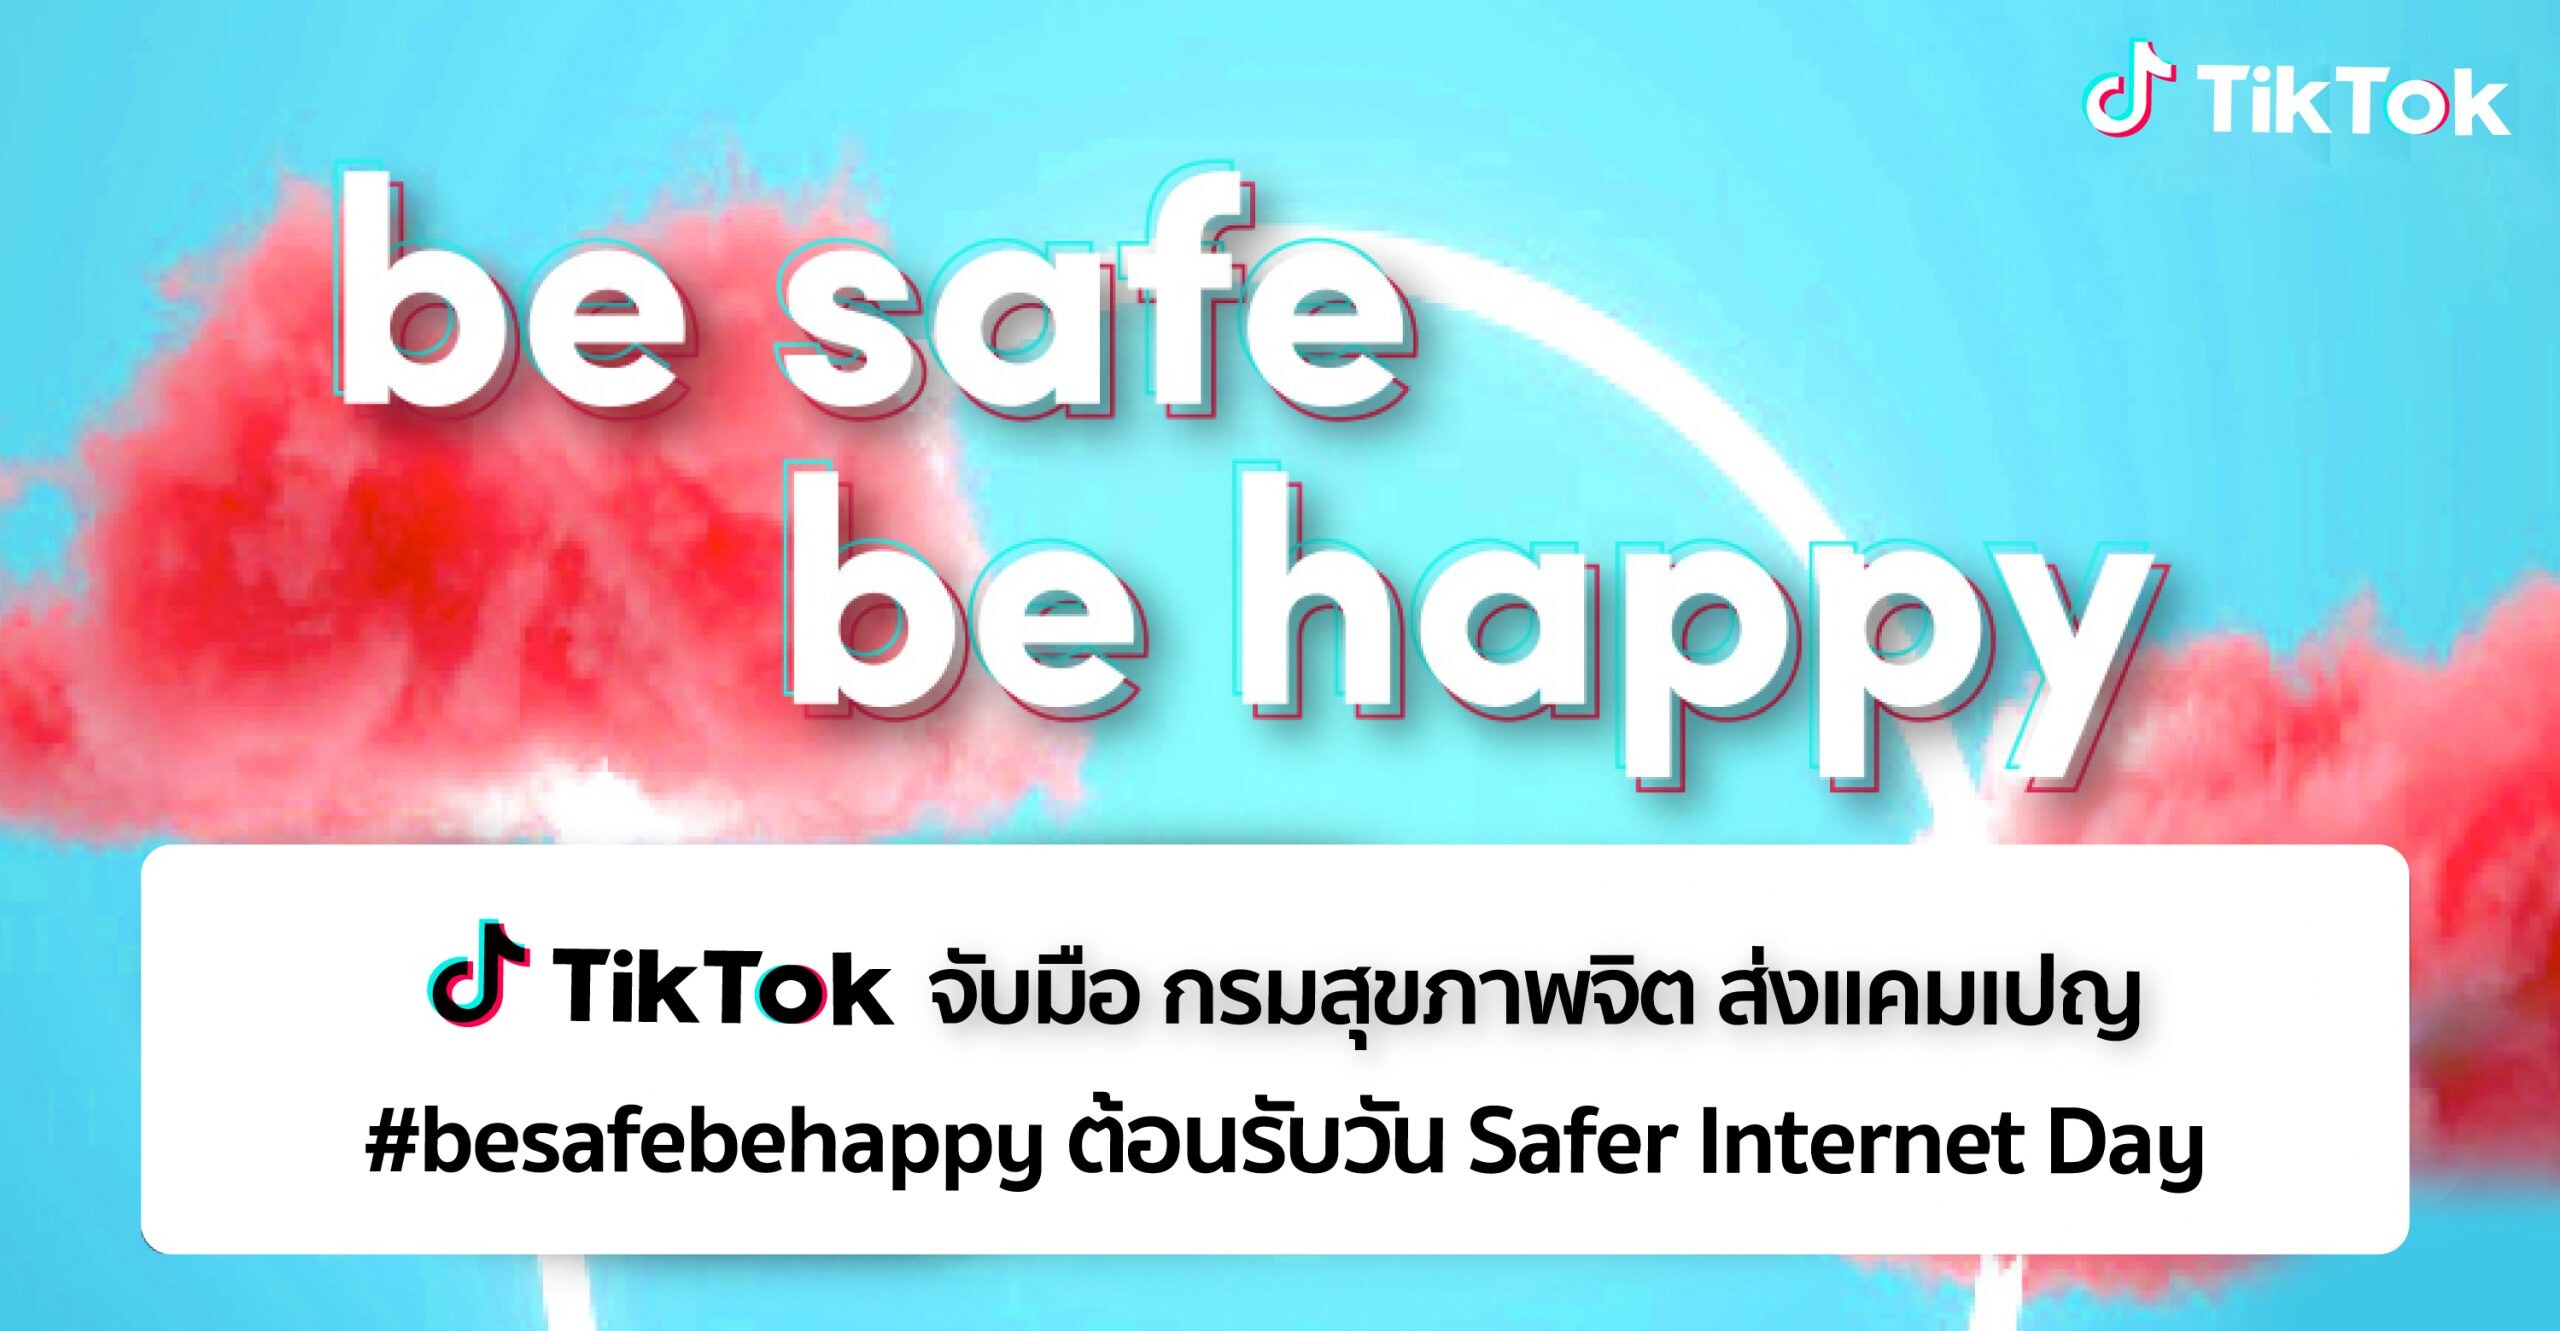 TikTok จับมือ กรมสุขภาพจิต ส่งแคมเปญ #besafebehappy ชวนคนไทยใช้อินเทอร์เน็ตให้ปลอดภัย ต้อนรับวัน Safer Internet Day